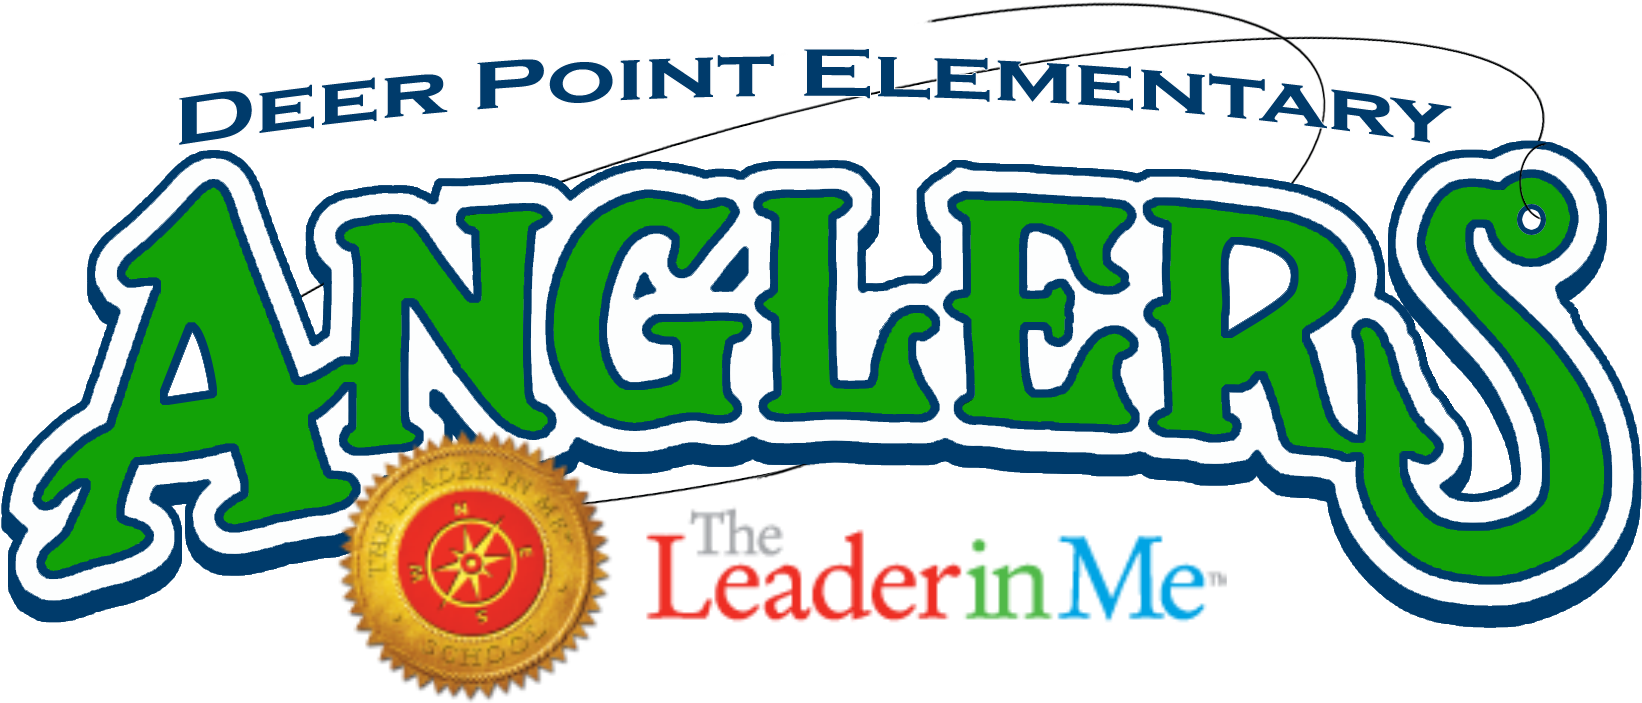 Deer Point Elementary School - Deer Point Elementary School Logo Clipart (1699x761), Png Download